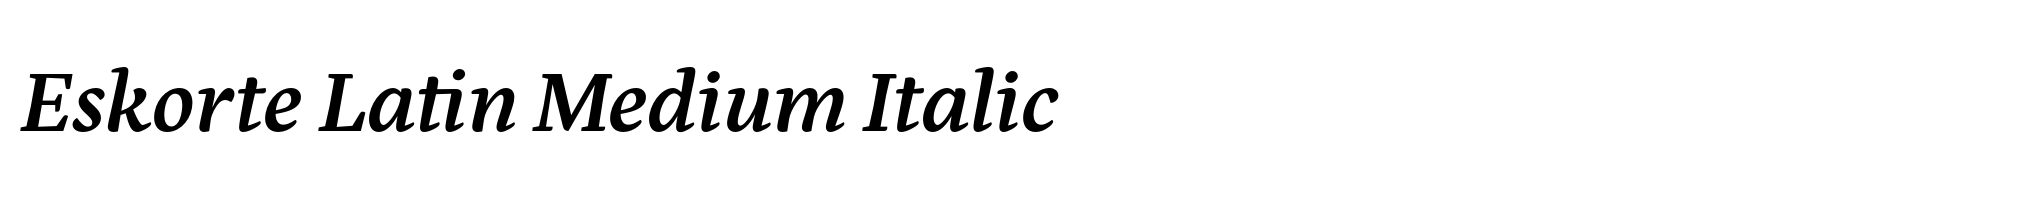 Eskorte Latin Medium Italic image